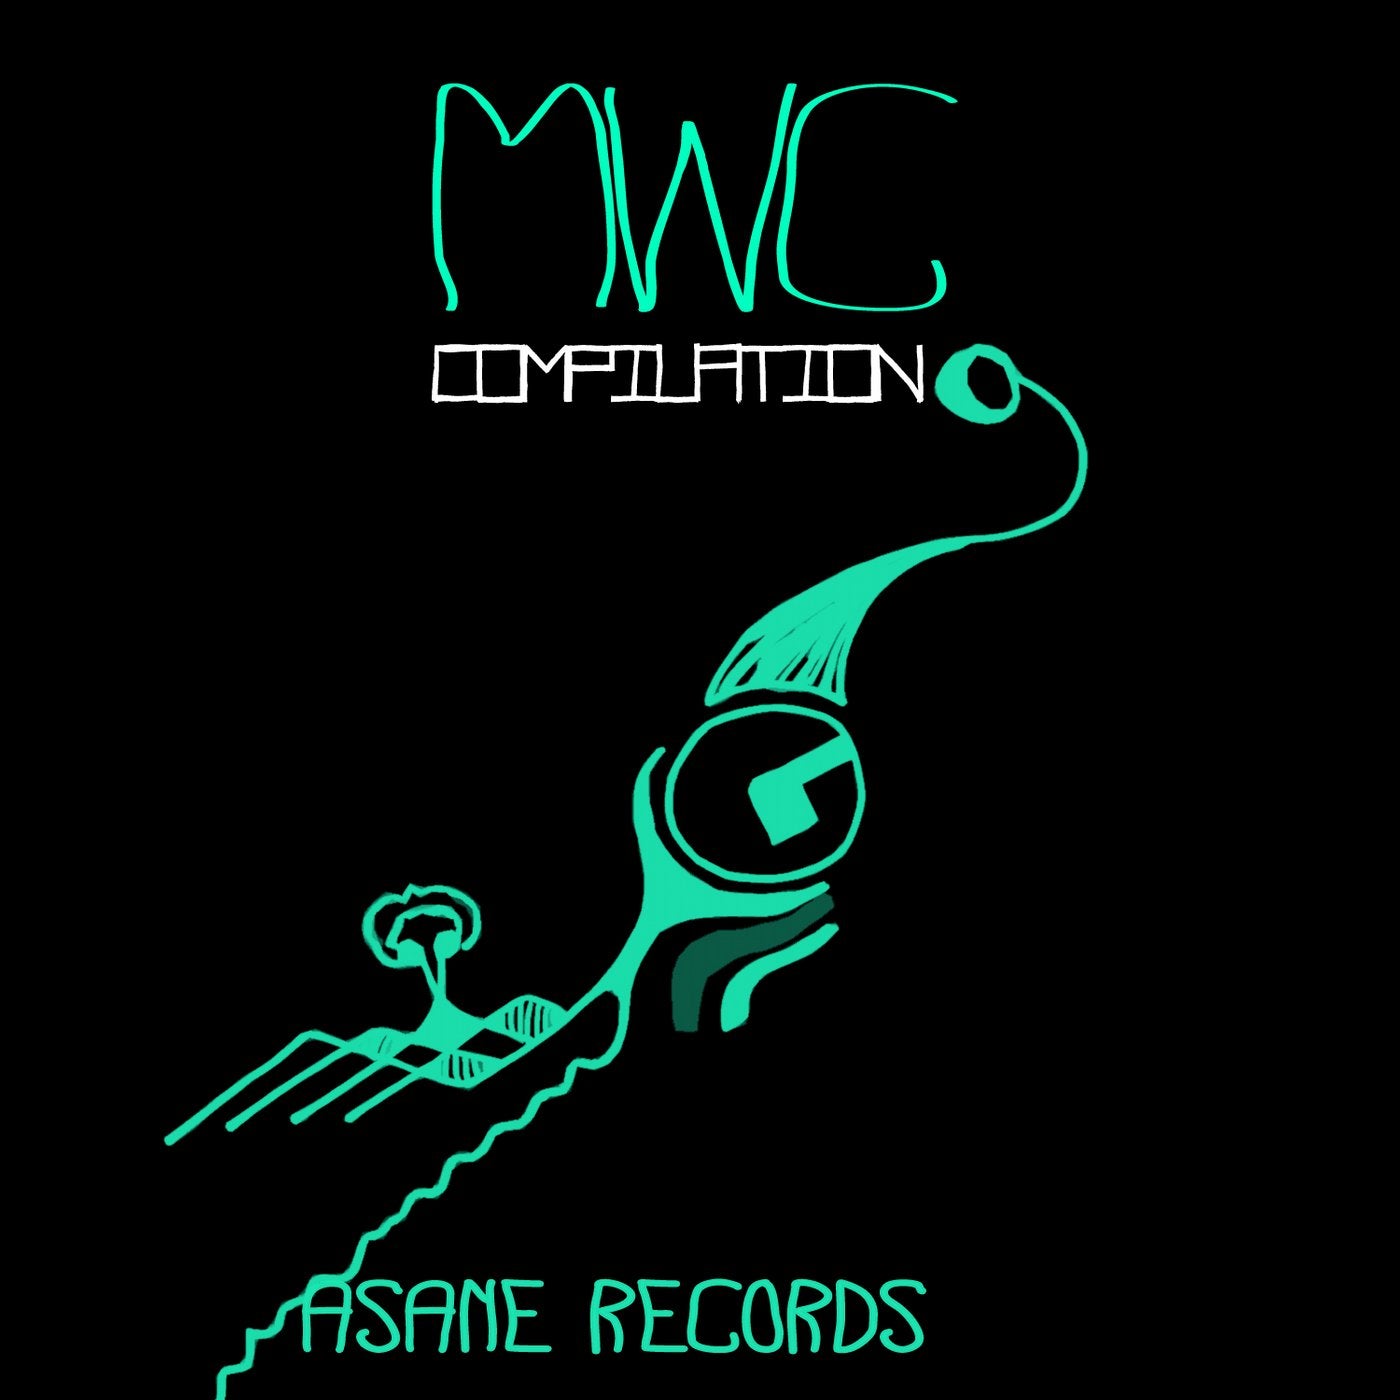 Mwc Compilation